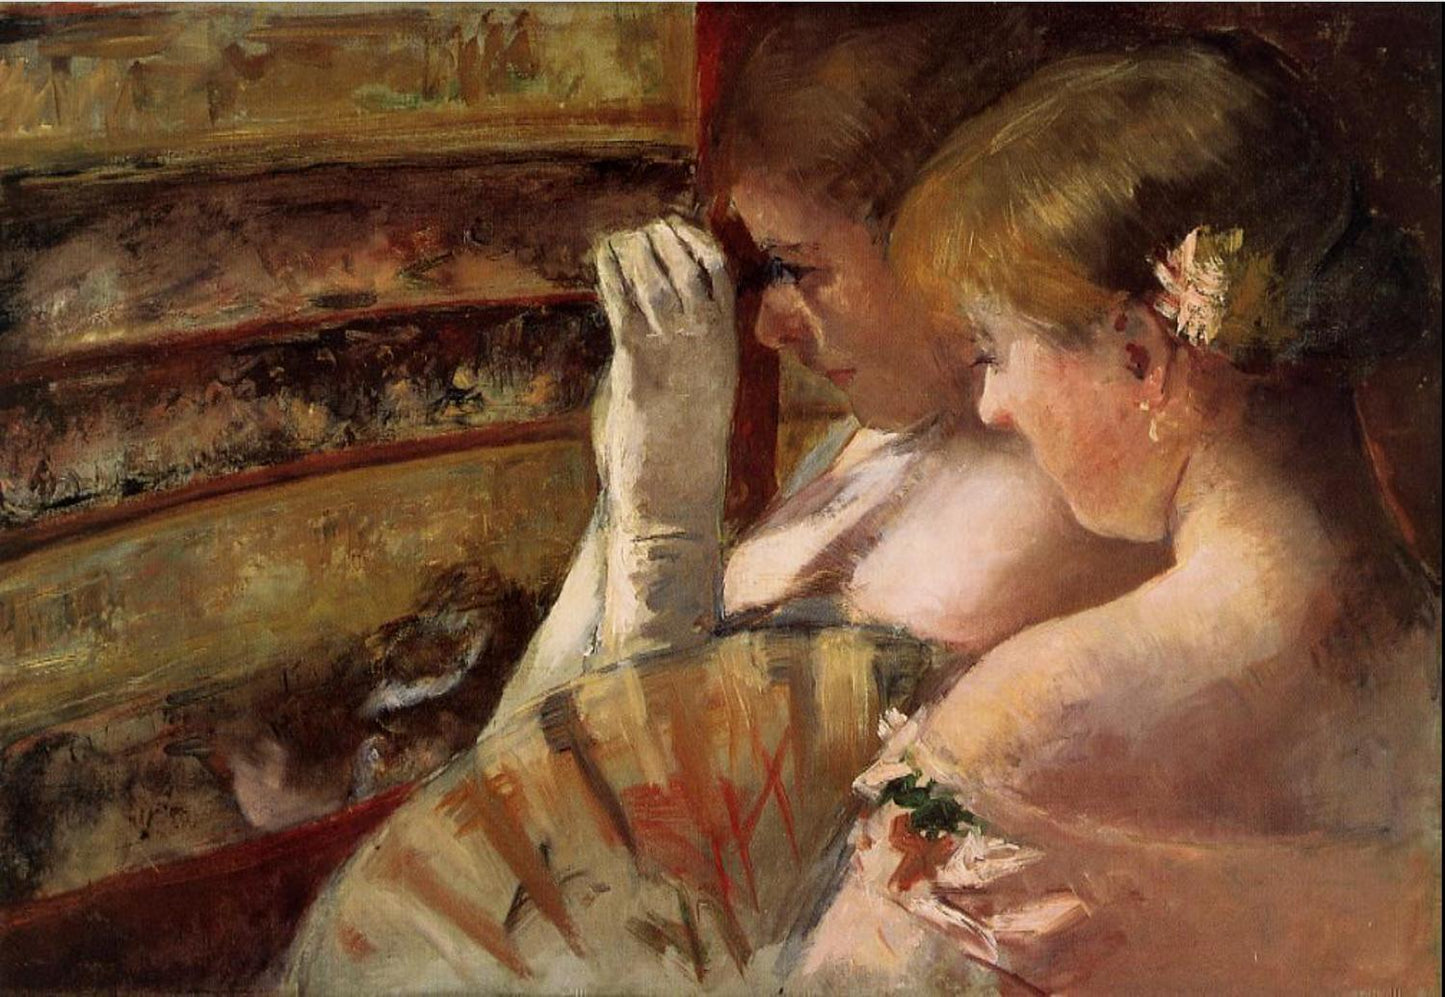 In the Box (1879), Mary Cassatt